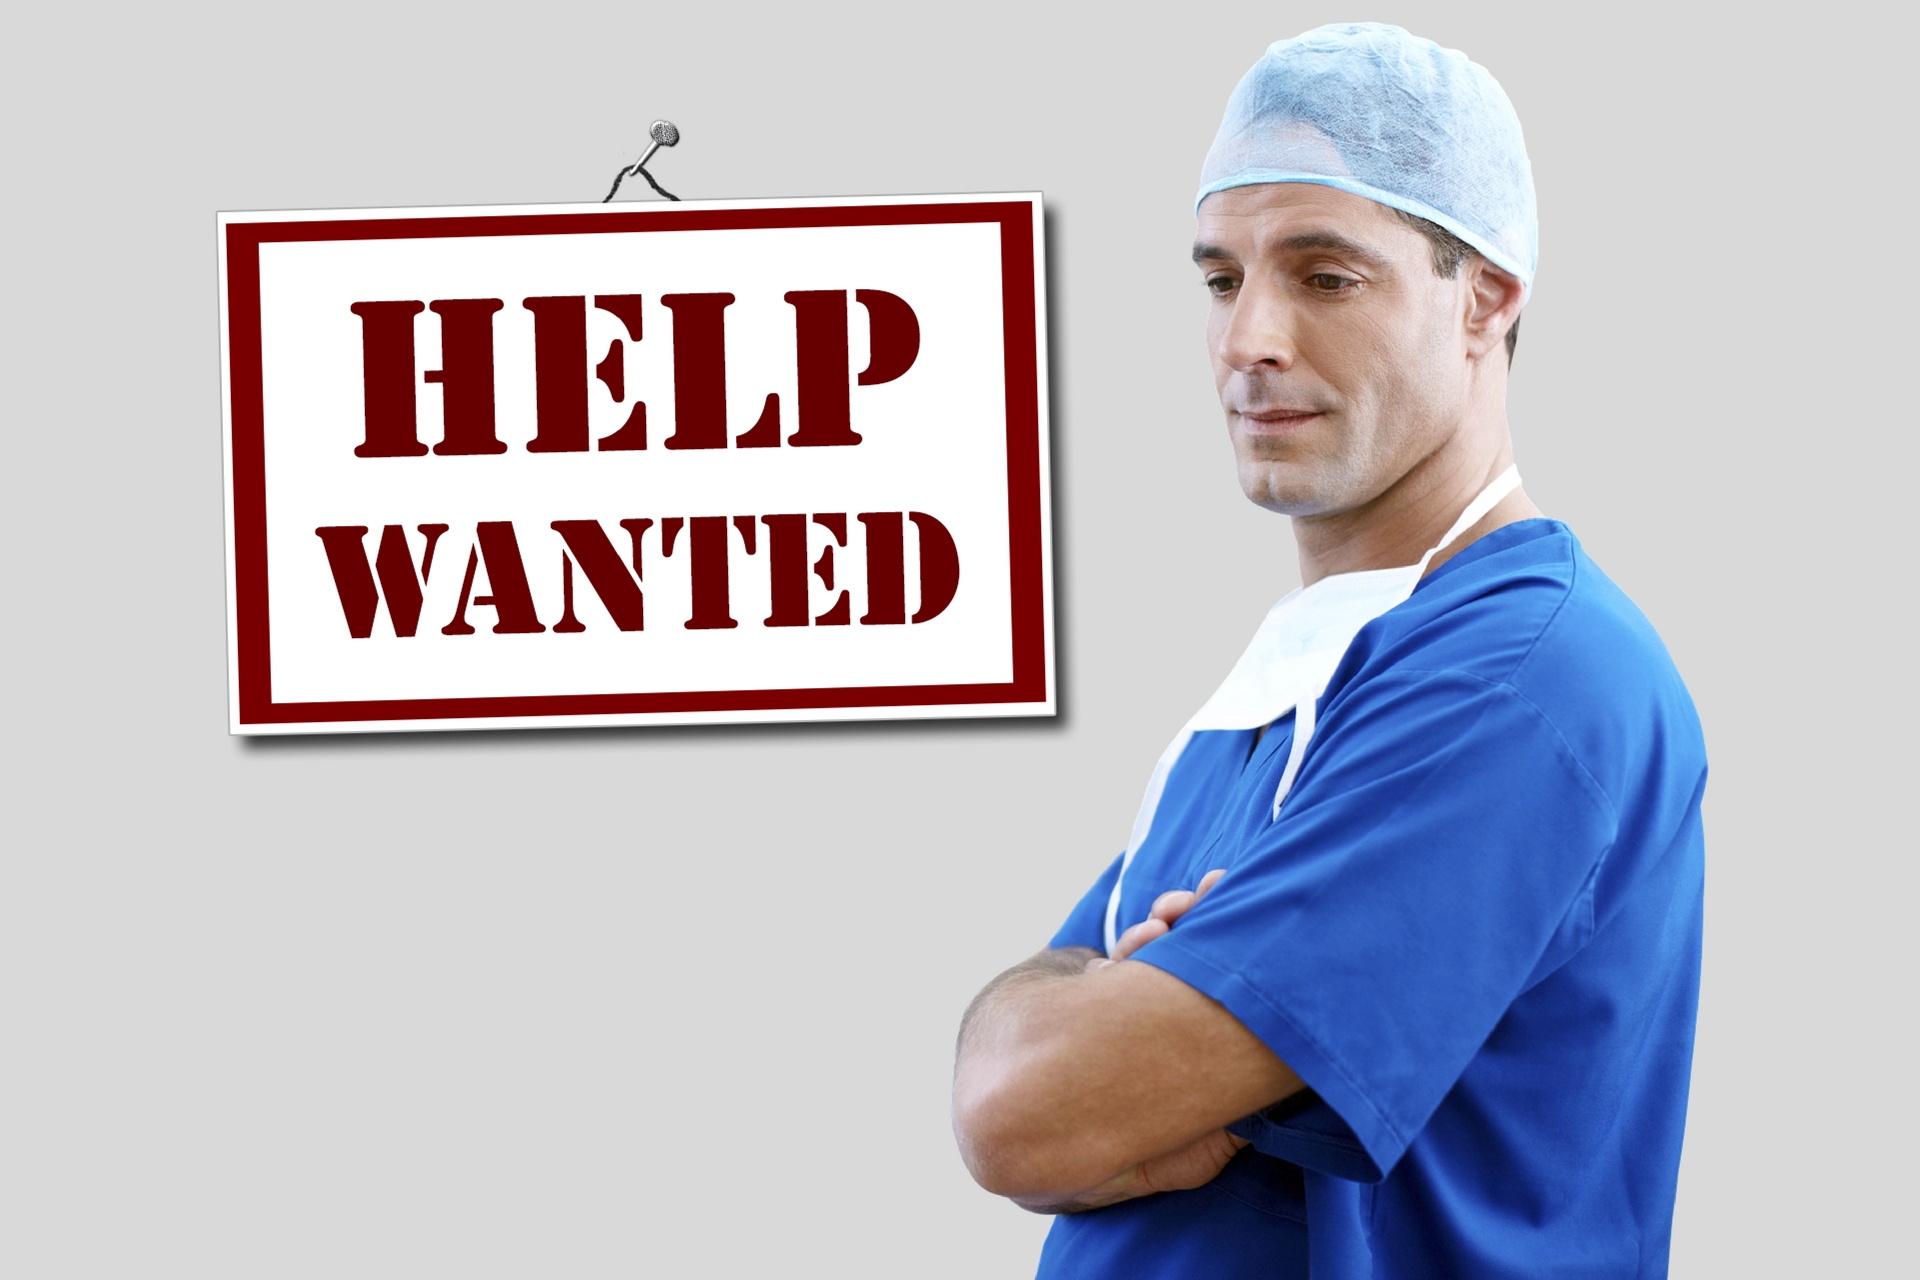 wanted: male nurses